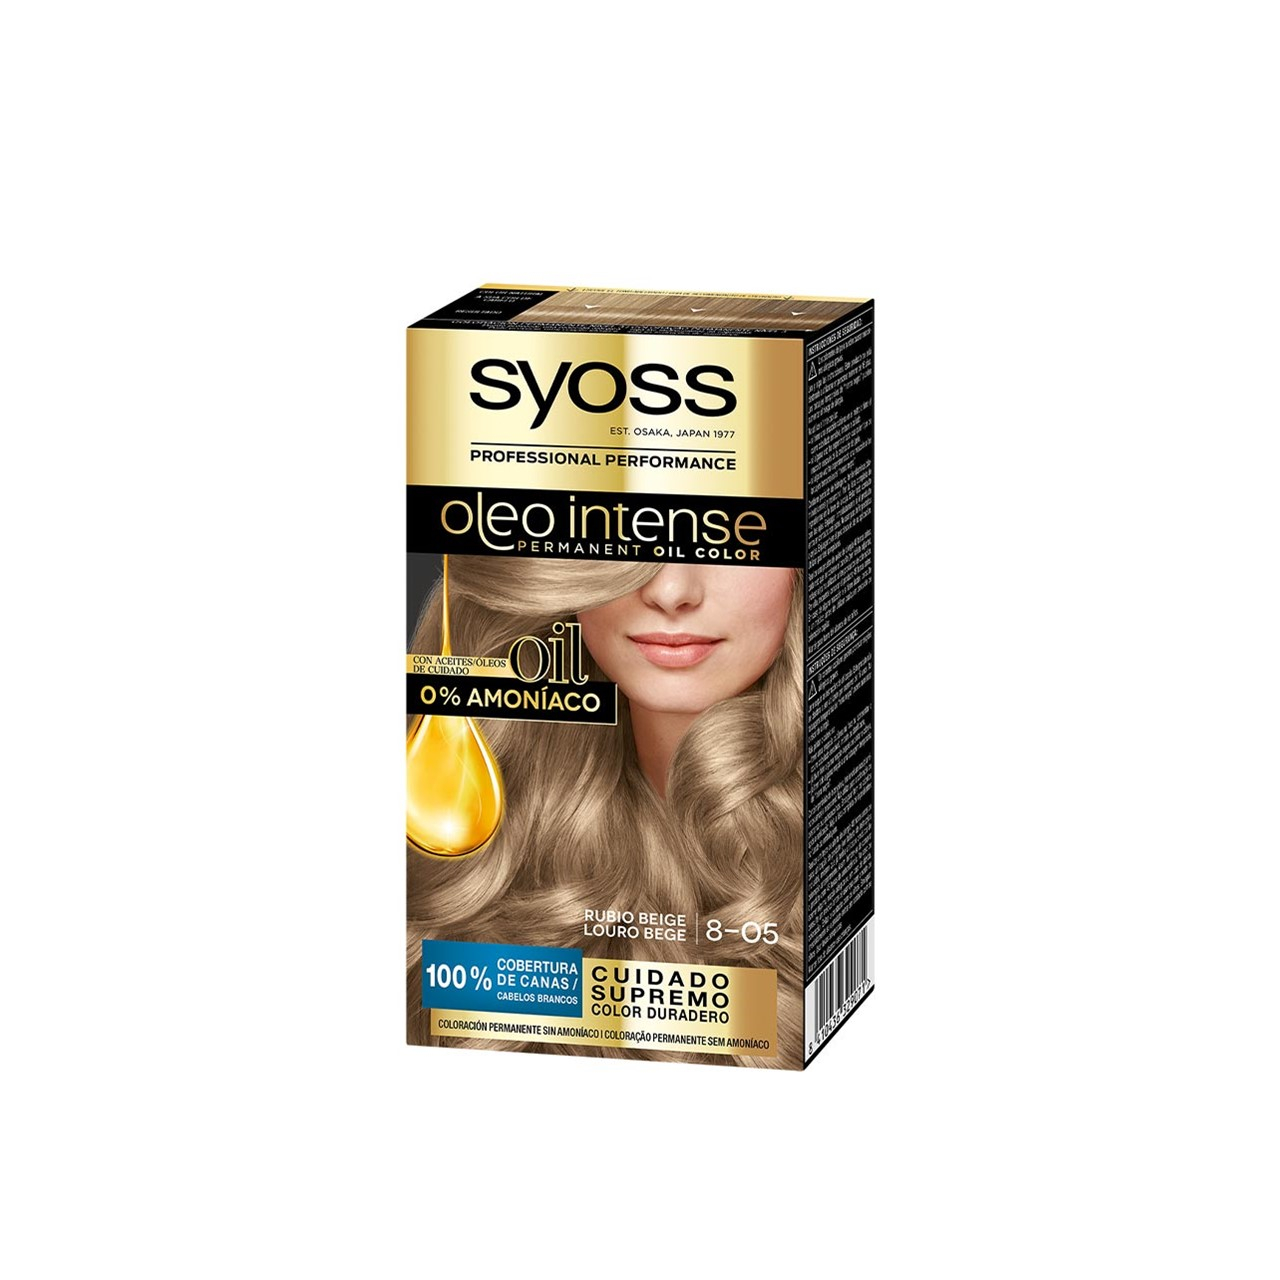 Syoss Oleo Intense Permanent Oil Color 8-05 Beige Blonde Permanent Hair Dye